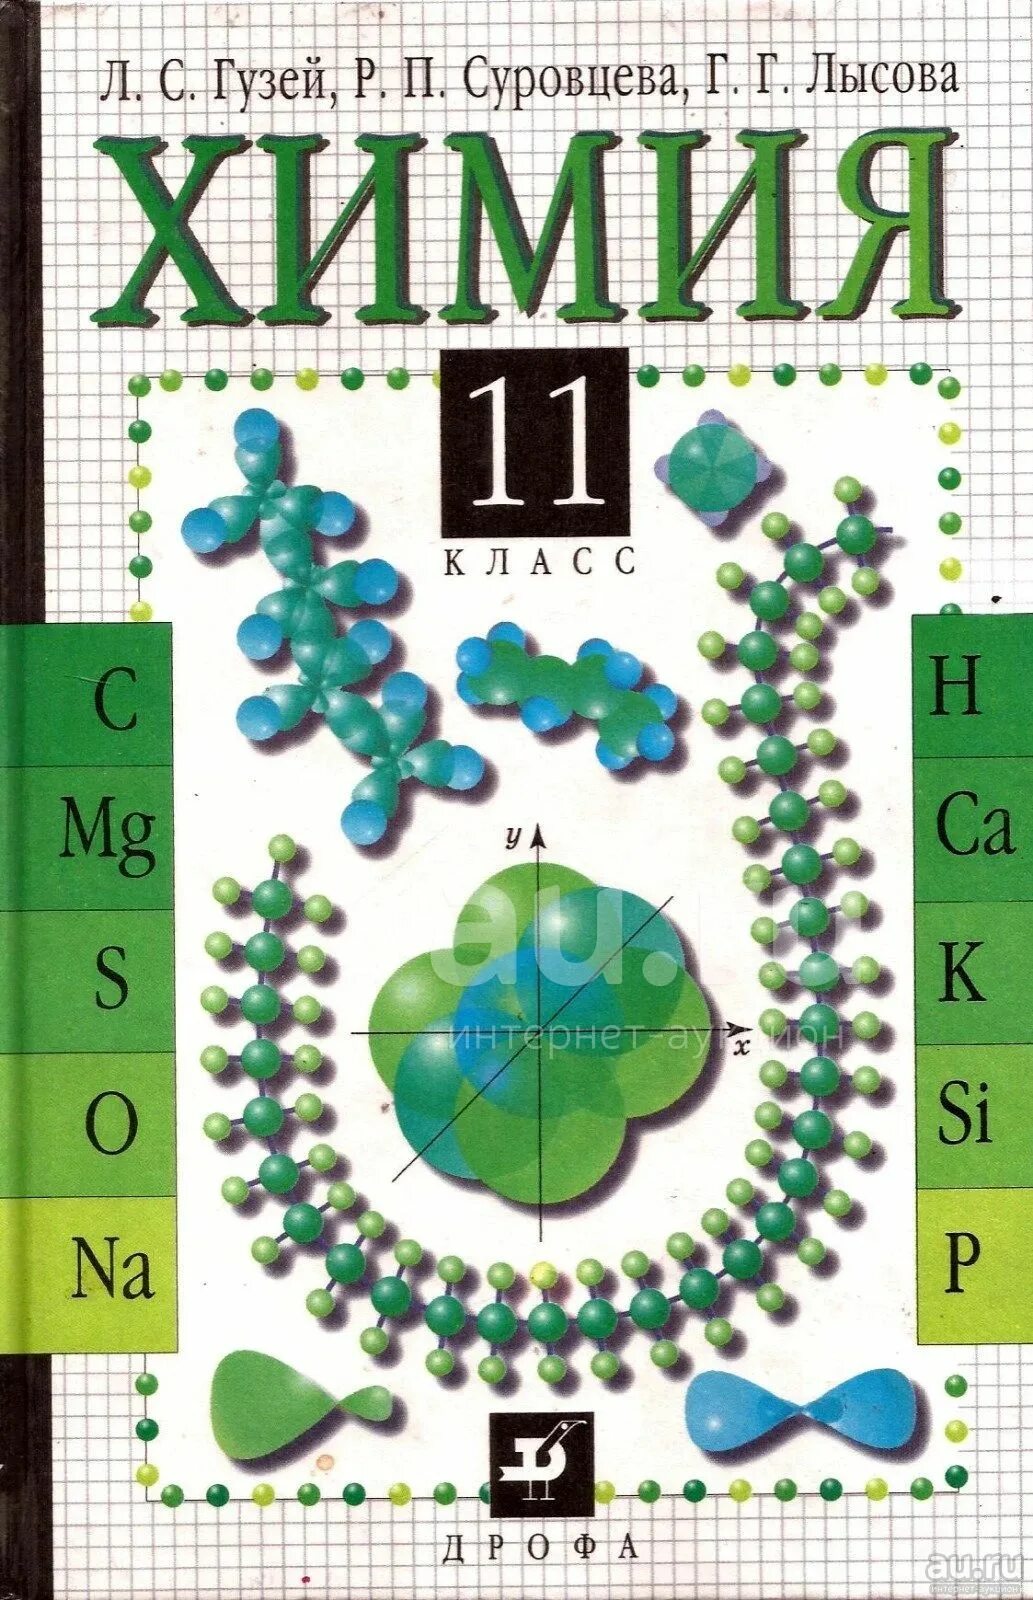 Учебник химия 11 еремин. Химия 11 класс книга. Химия учебник Гузей Суровцева. Химия учебник 11. Химия 10-11 класс учебник.